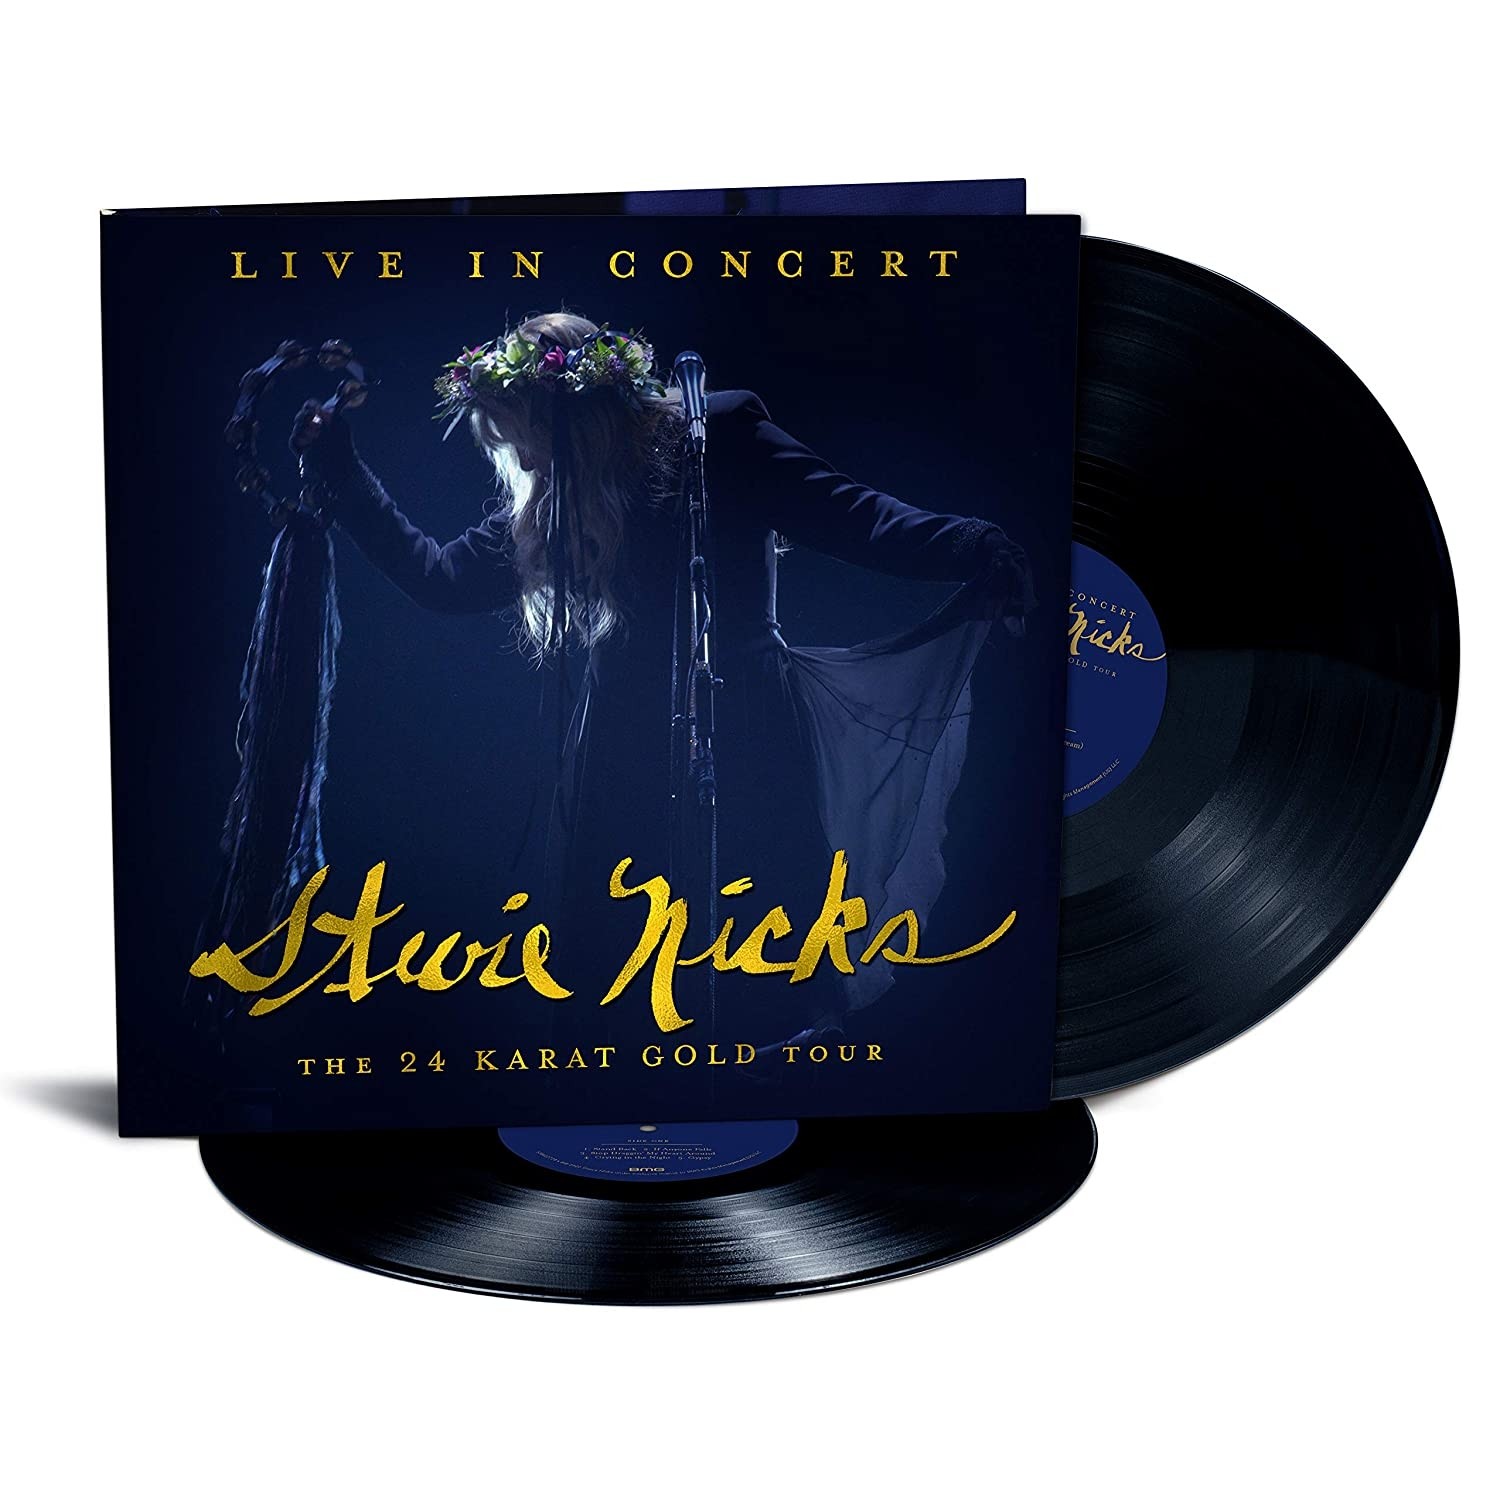 Stevie Nicks - Live In Concert The 24 Karat Gold Tour 2XLP